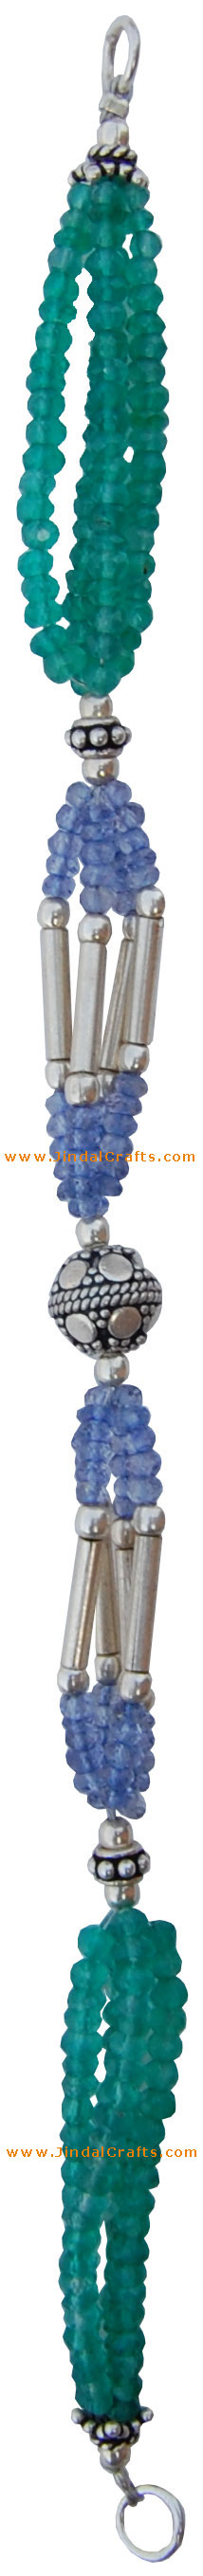 Handmade Silver / Semi Precious Stones Bracelet Jewelry India Art Novica Gaiam